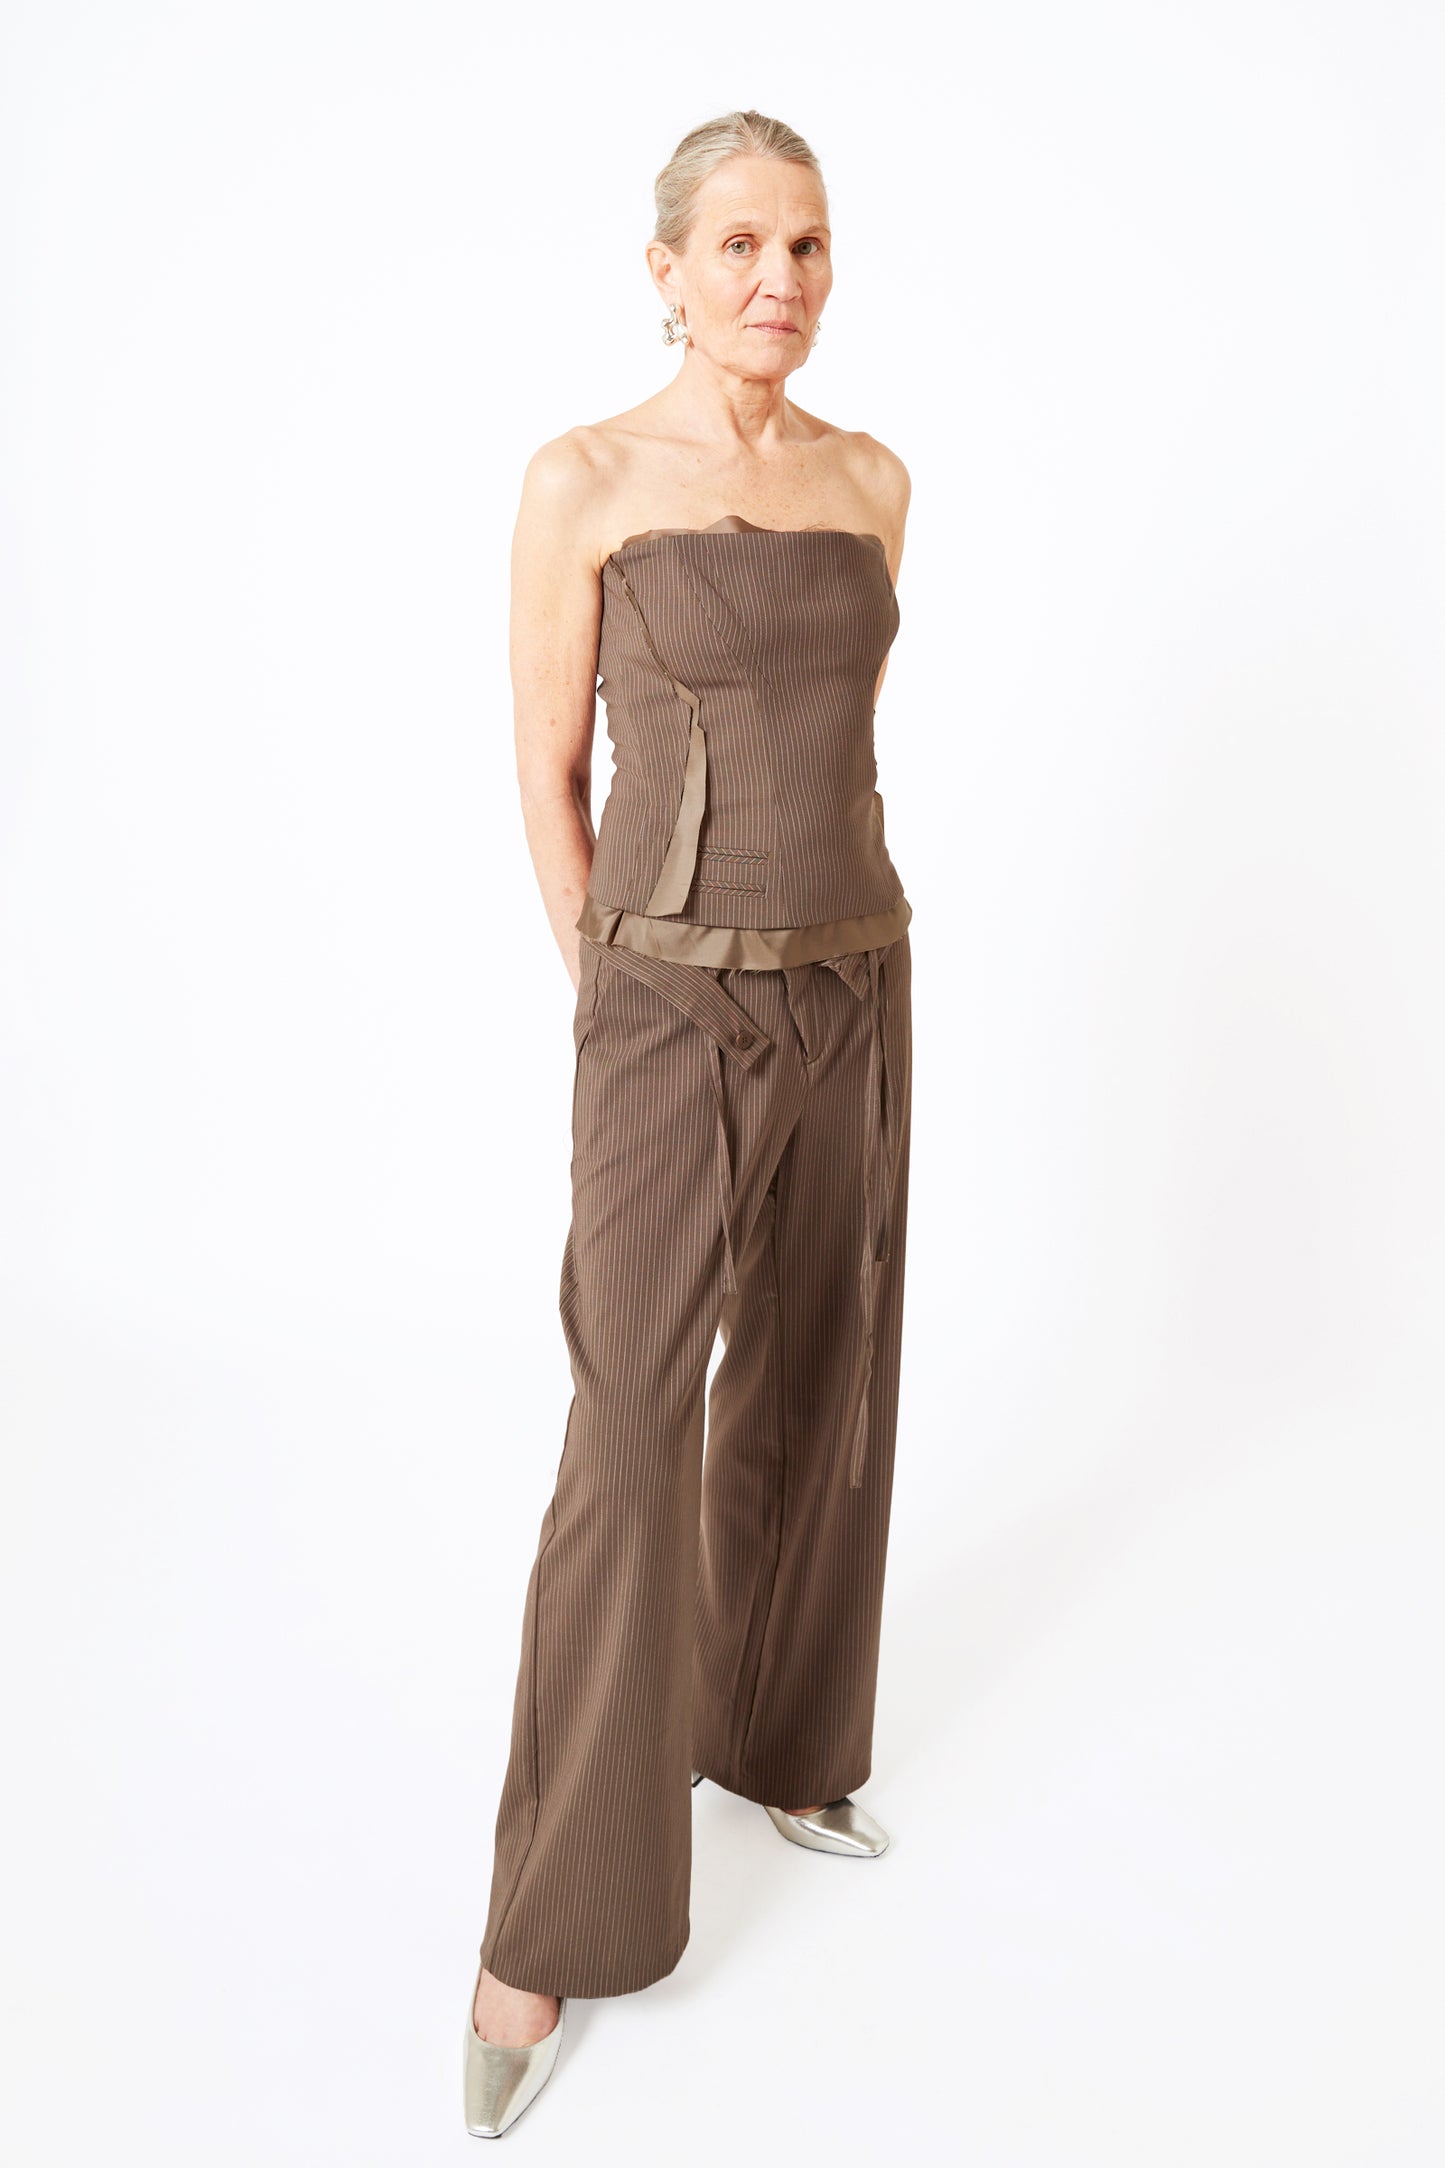 Double Fold Suit Pants - Brown Pinstripe